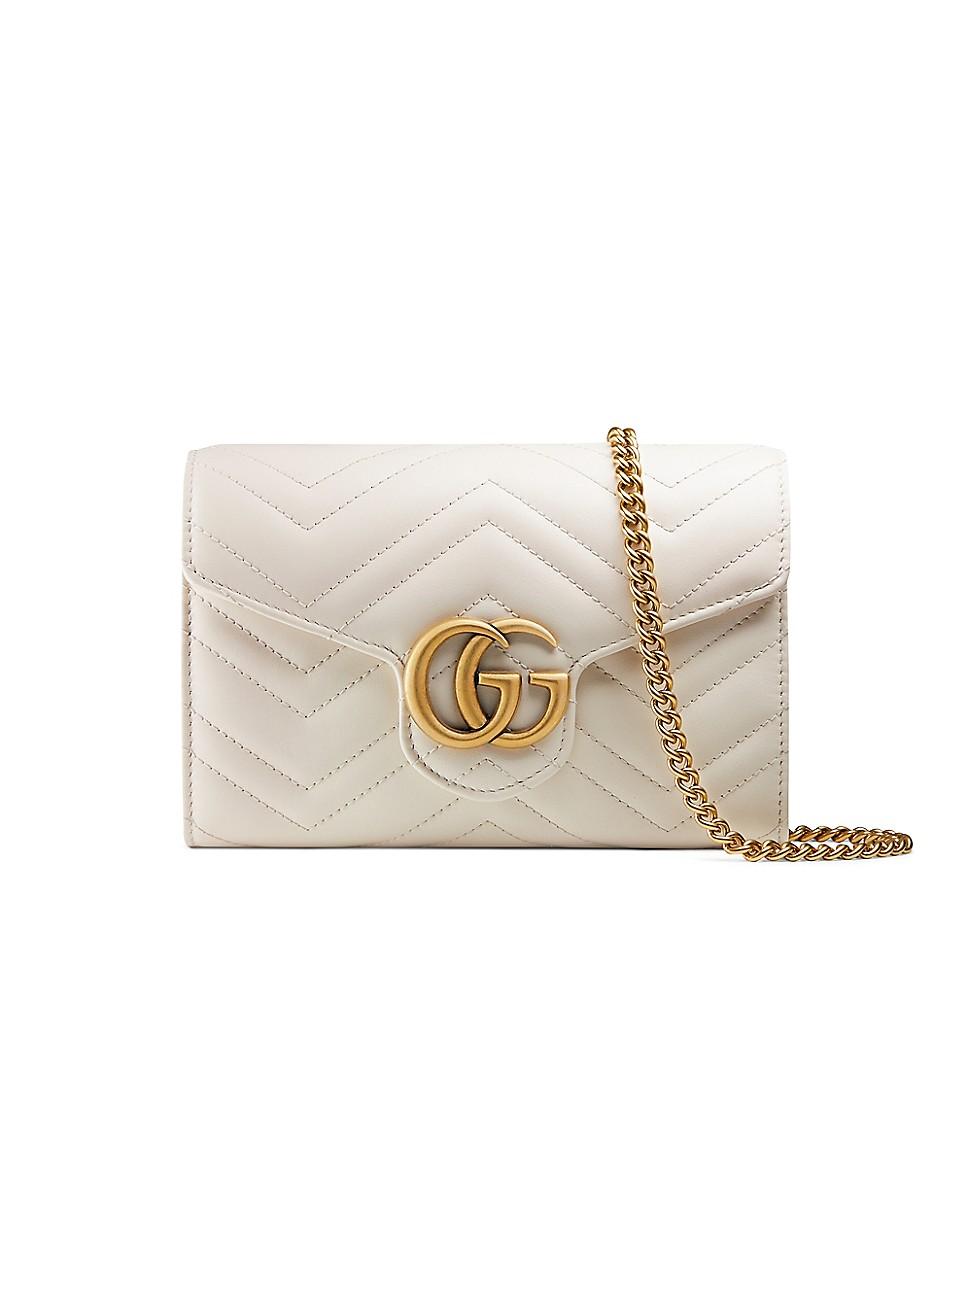 Gucci Leather GG Marmont Matelassé Mini Bag in White | Lyst